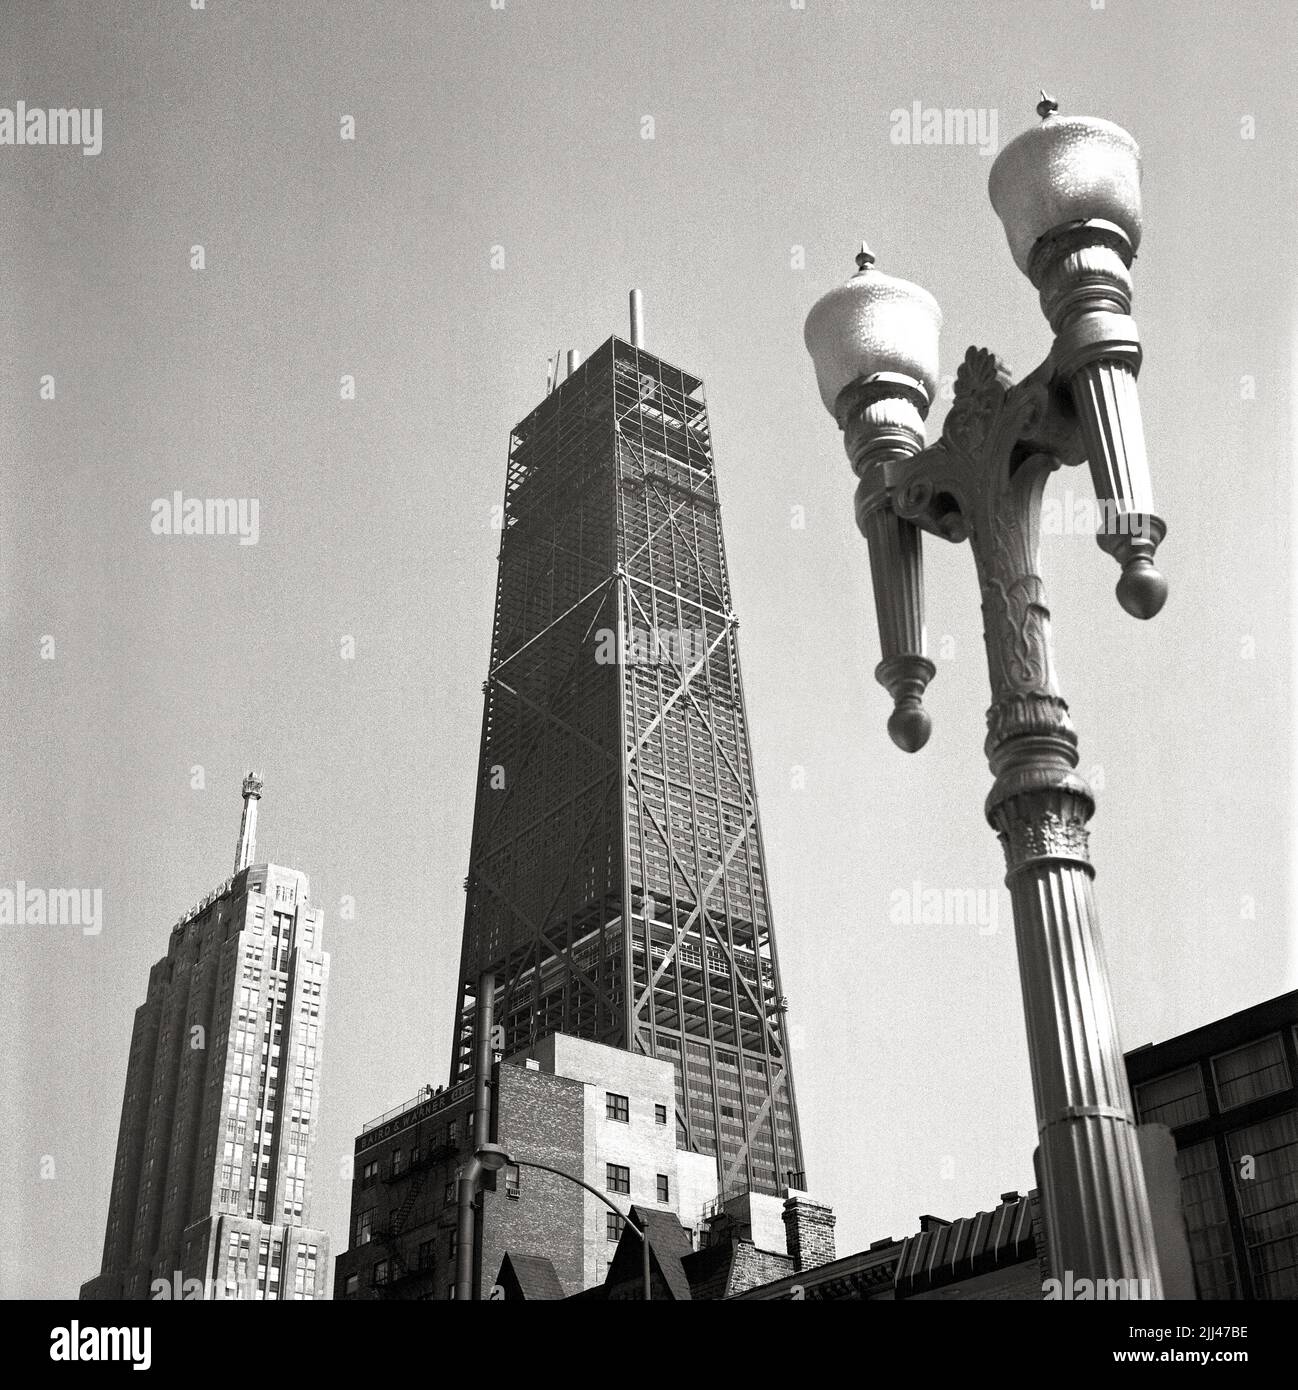 John Hancock building during construction, 1968.  Image from 6x6cm negative, photographer Vivian Maier. Stock Photo